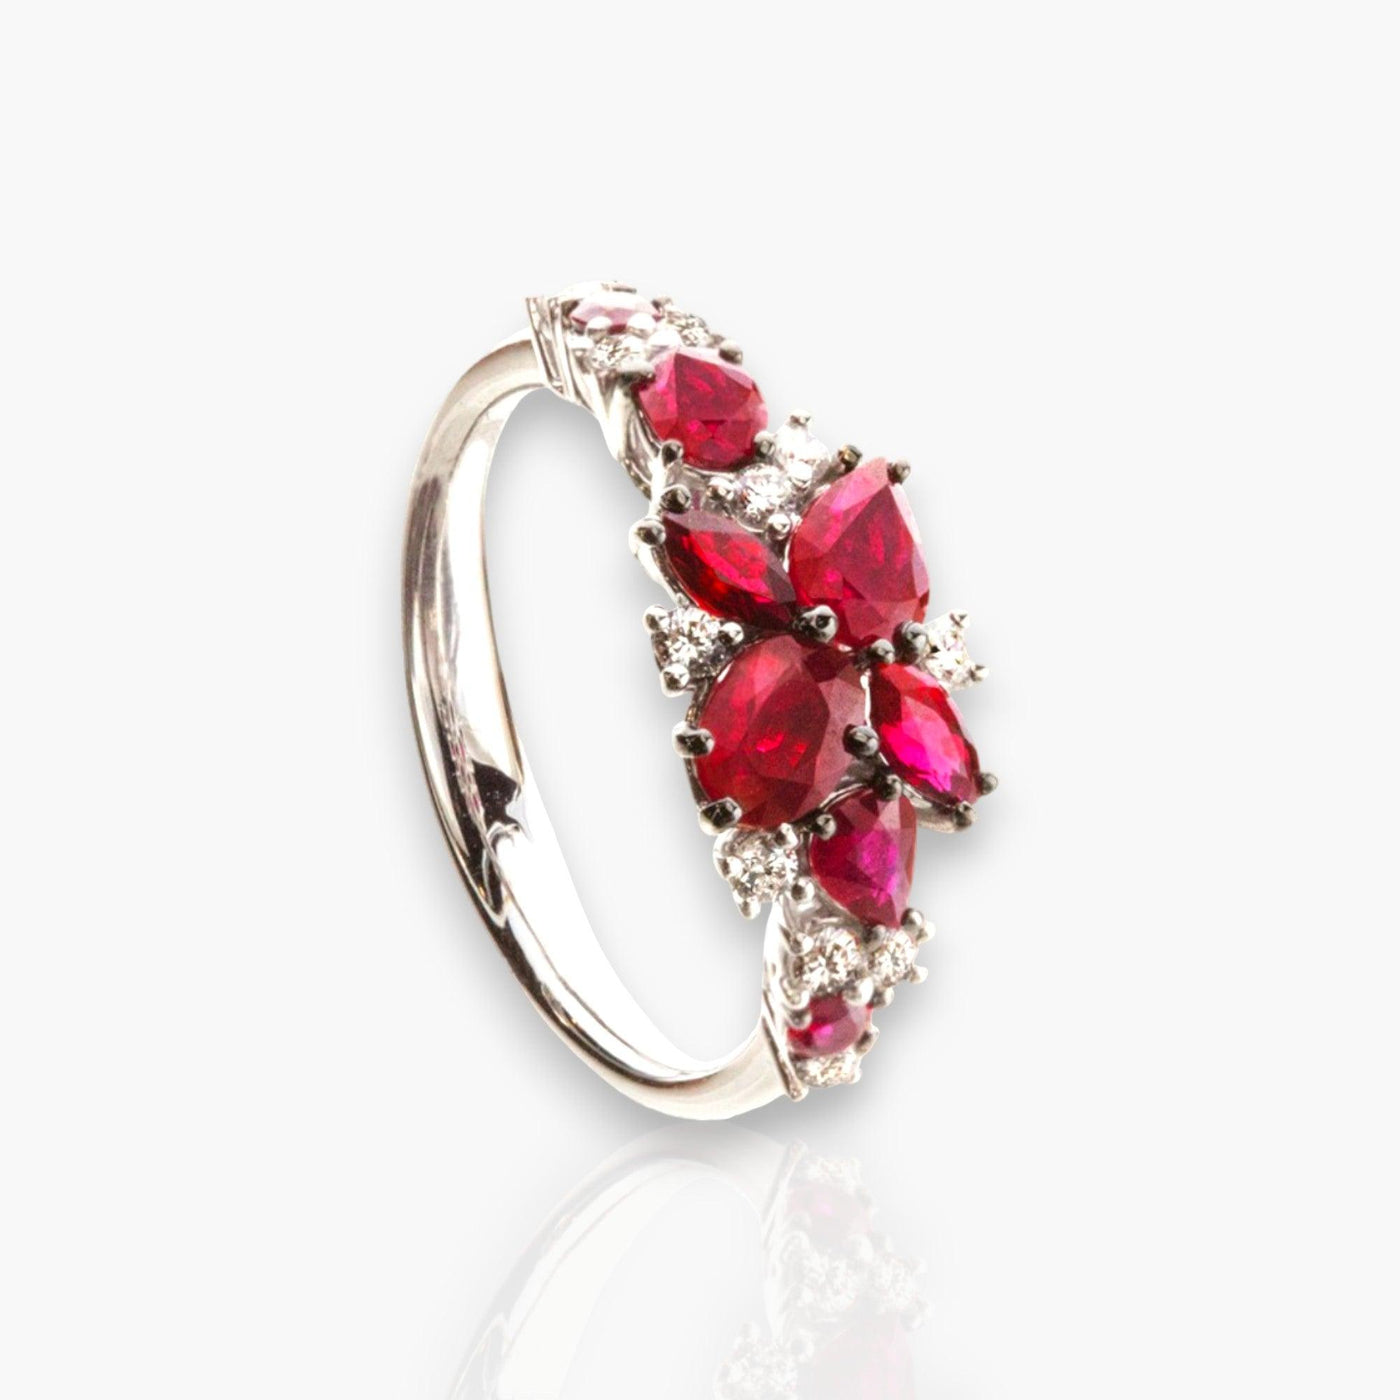 ANTARES Ring - Moregola Fine Jewelry